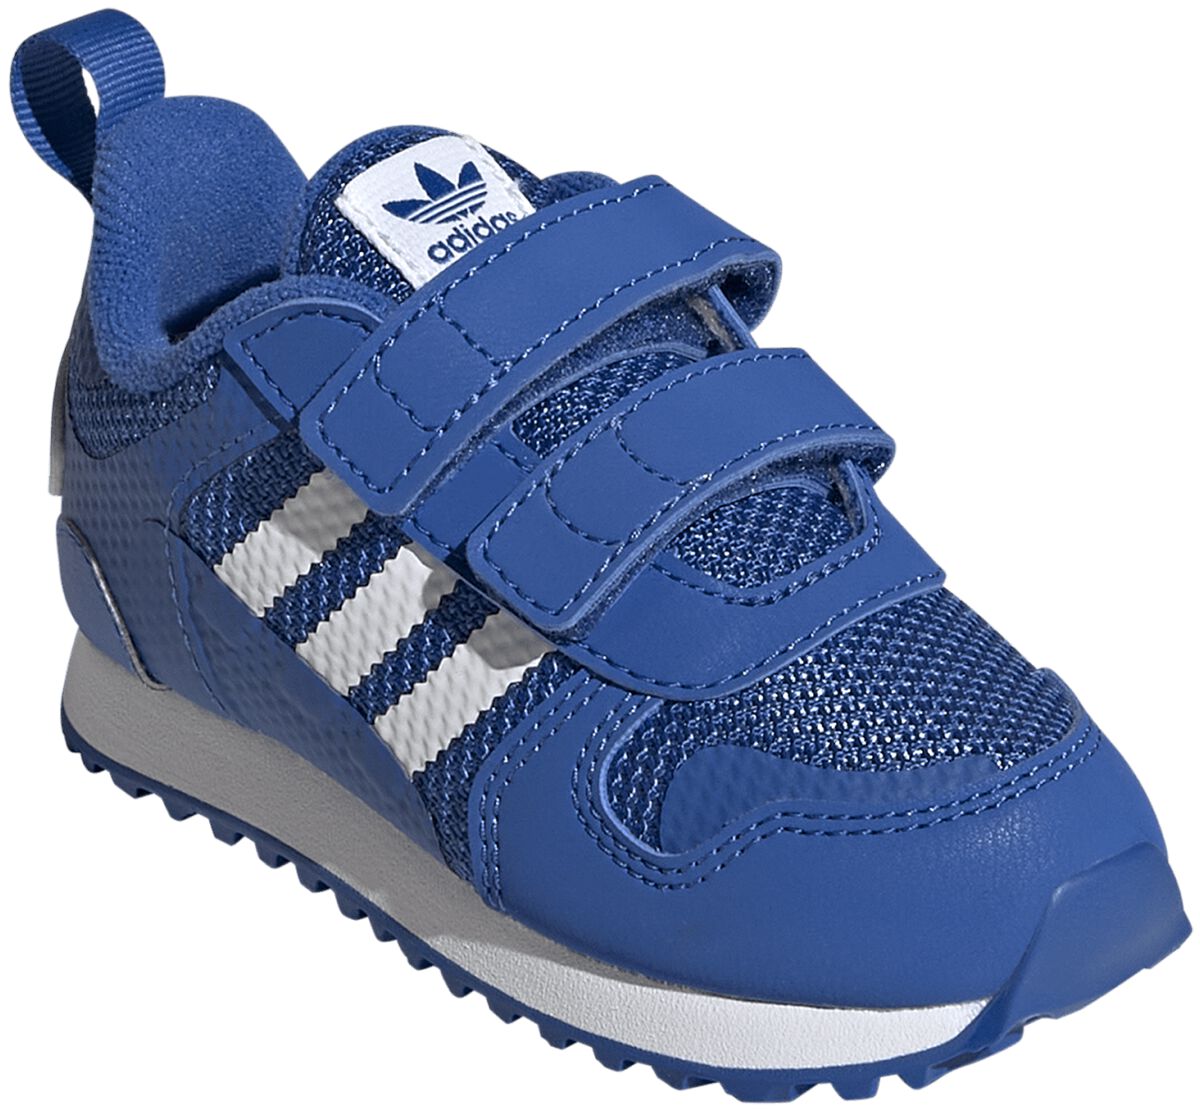 Adidas ZX 700 HD CF I Sneakers blue